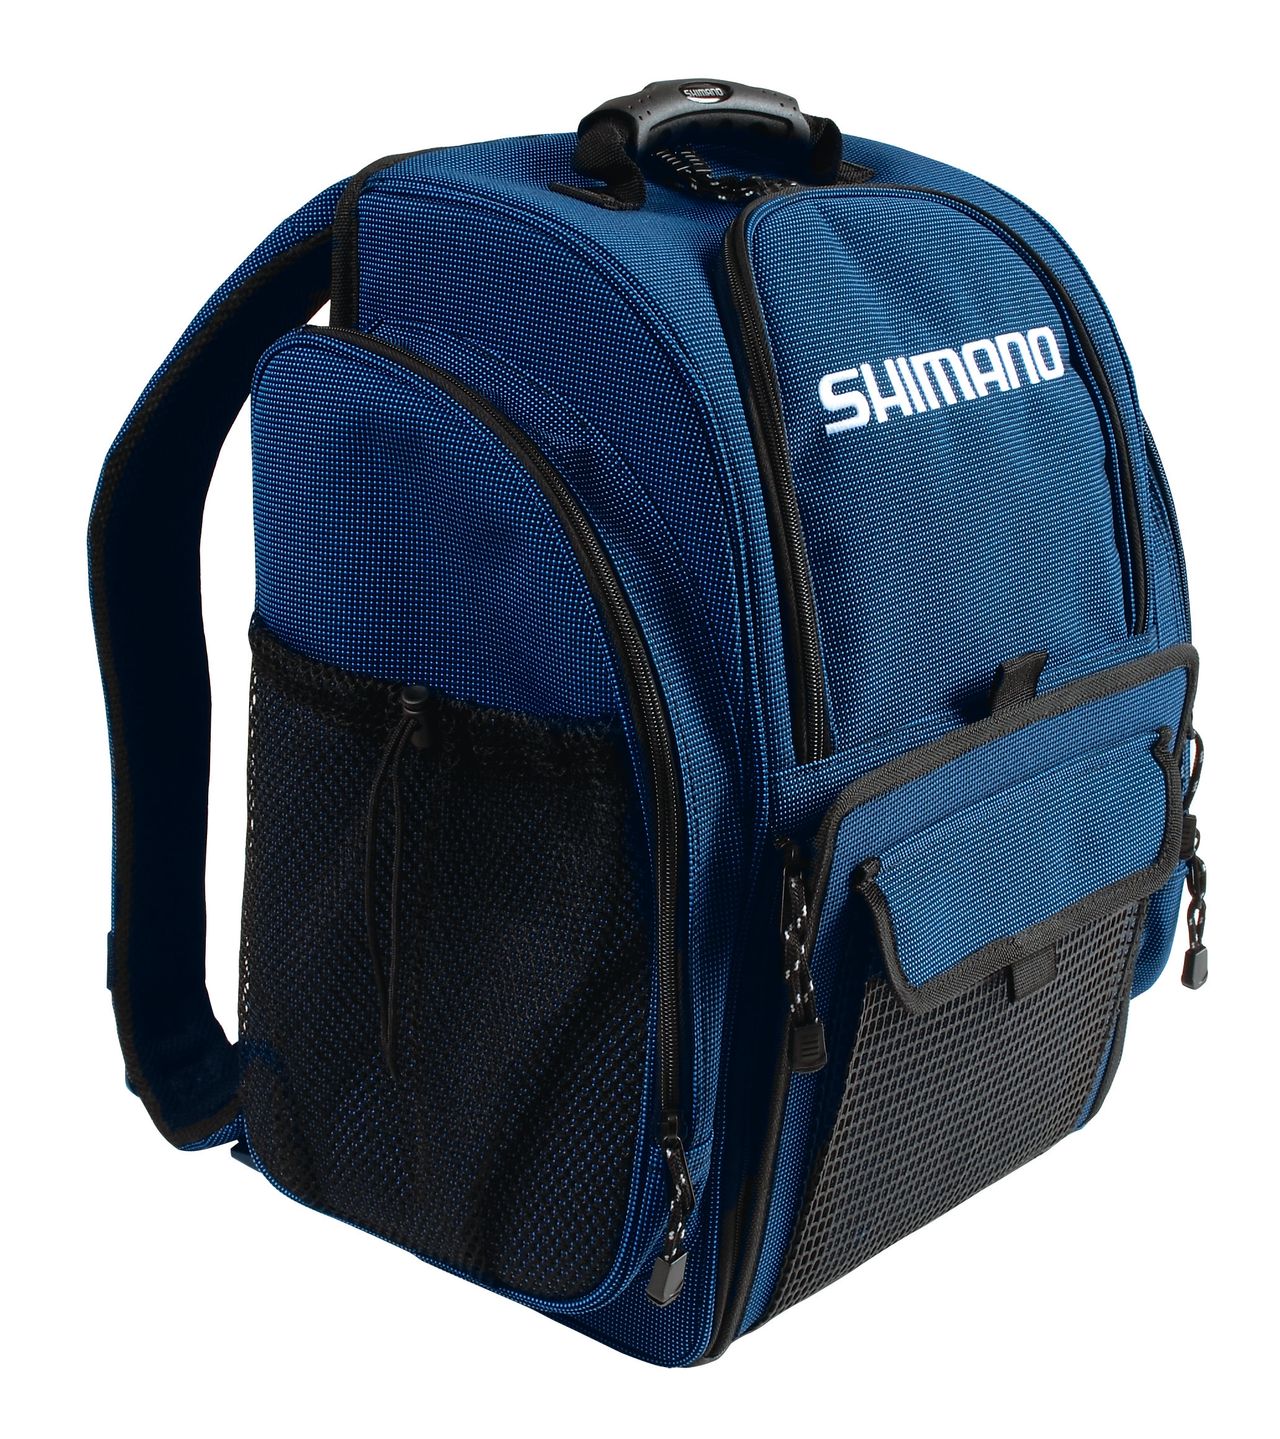 Shimano Blackmoon Backpacks.